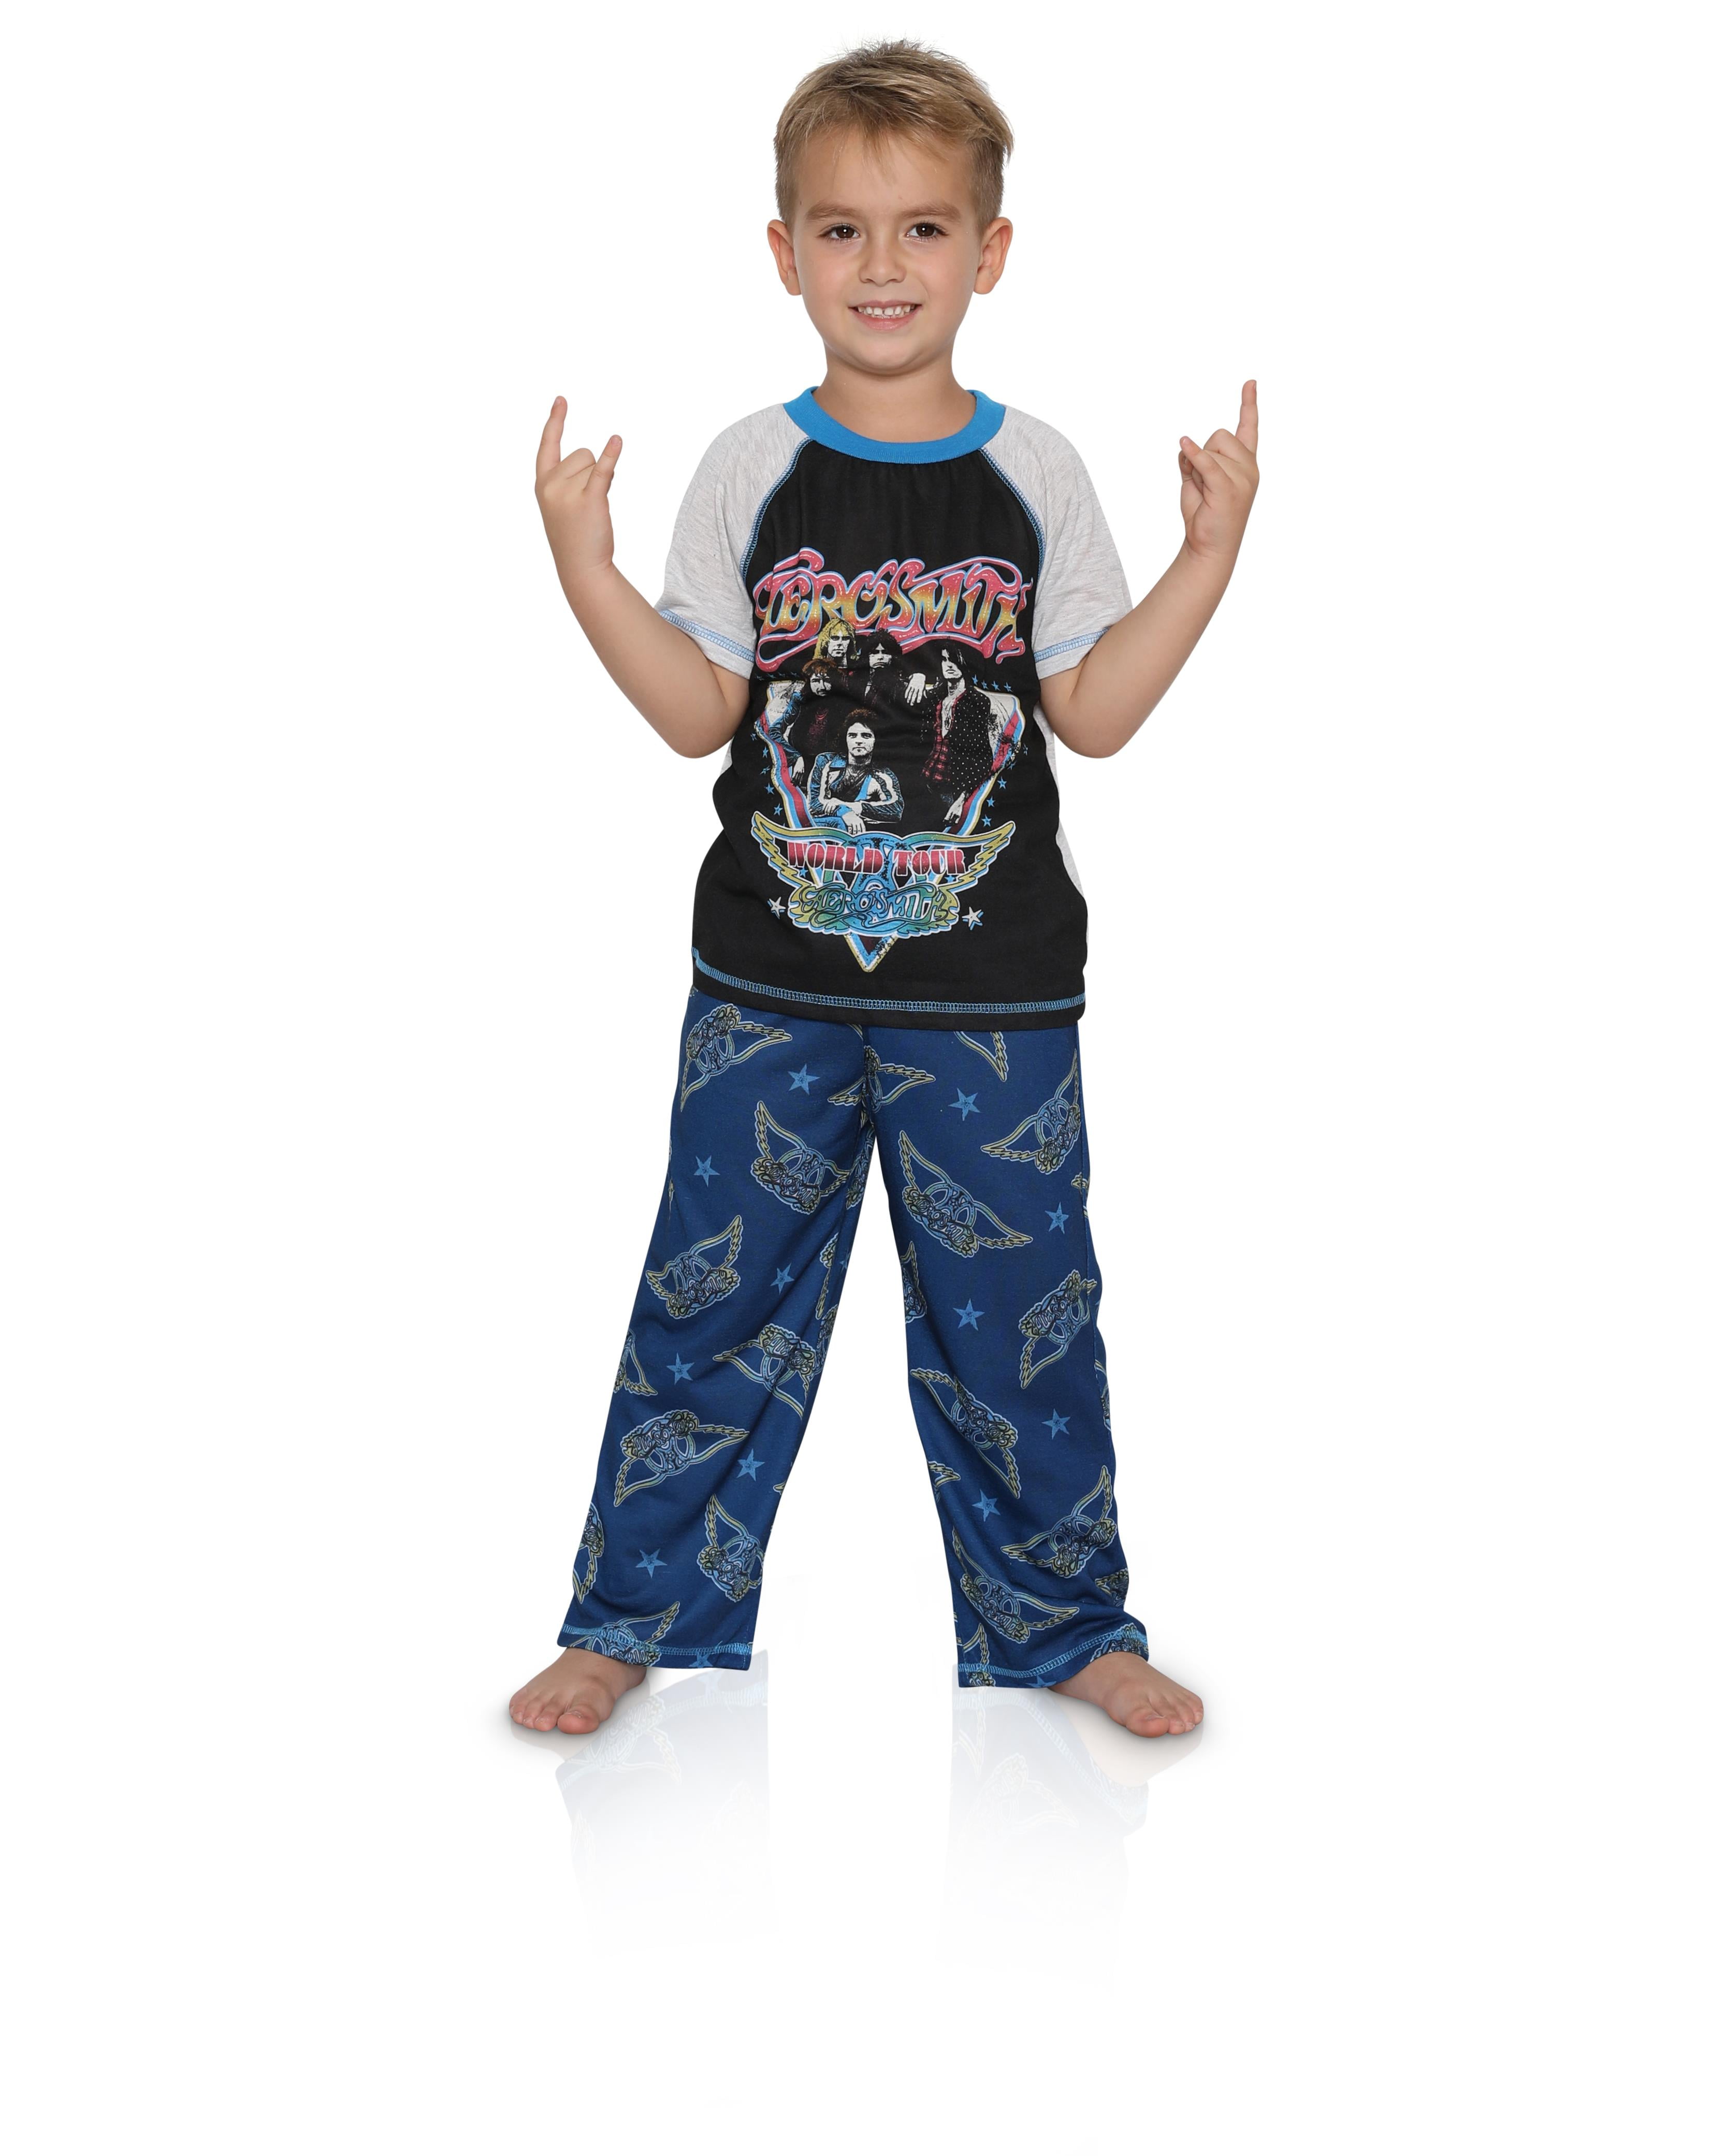 Details about   BOYS 2 Piece Pajama Set Toddler Size 2T 7 